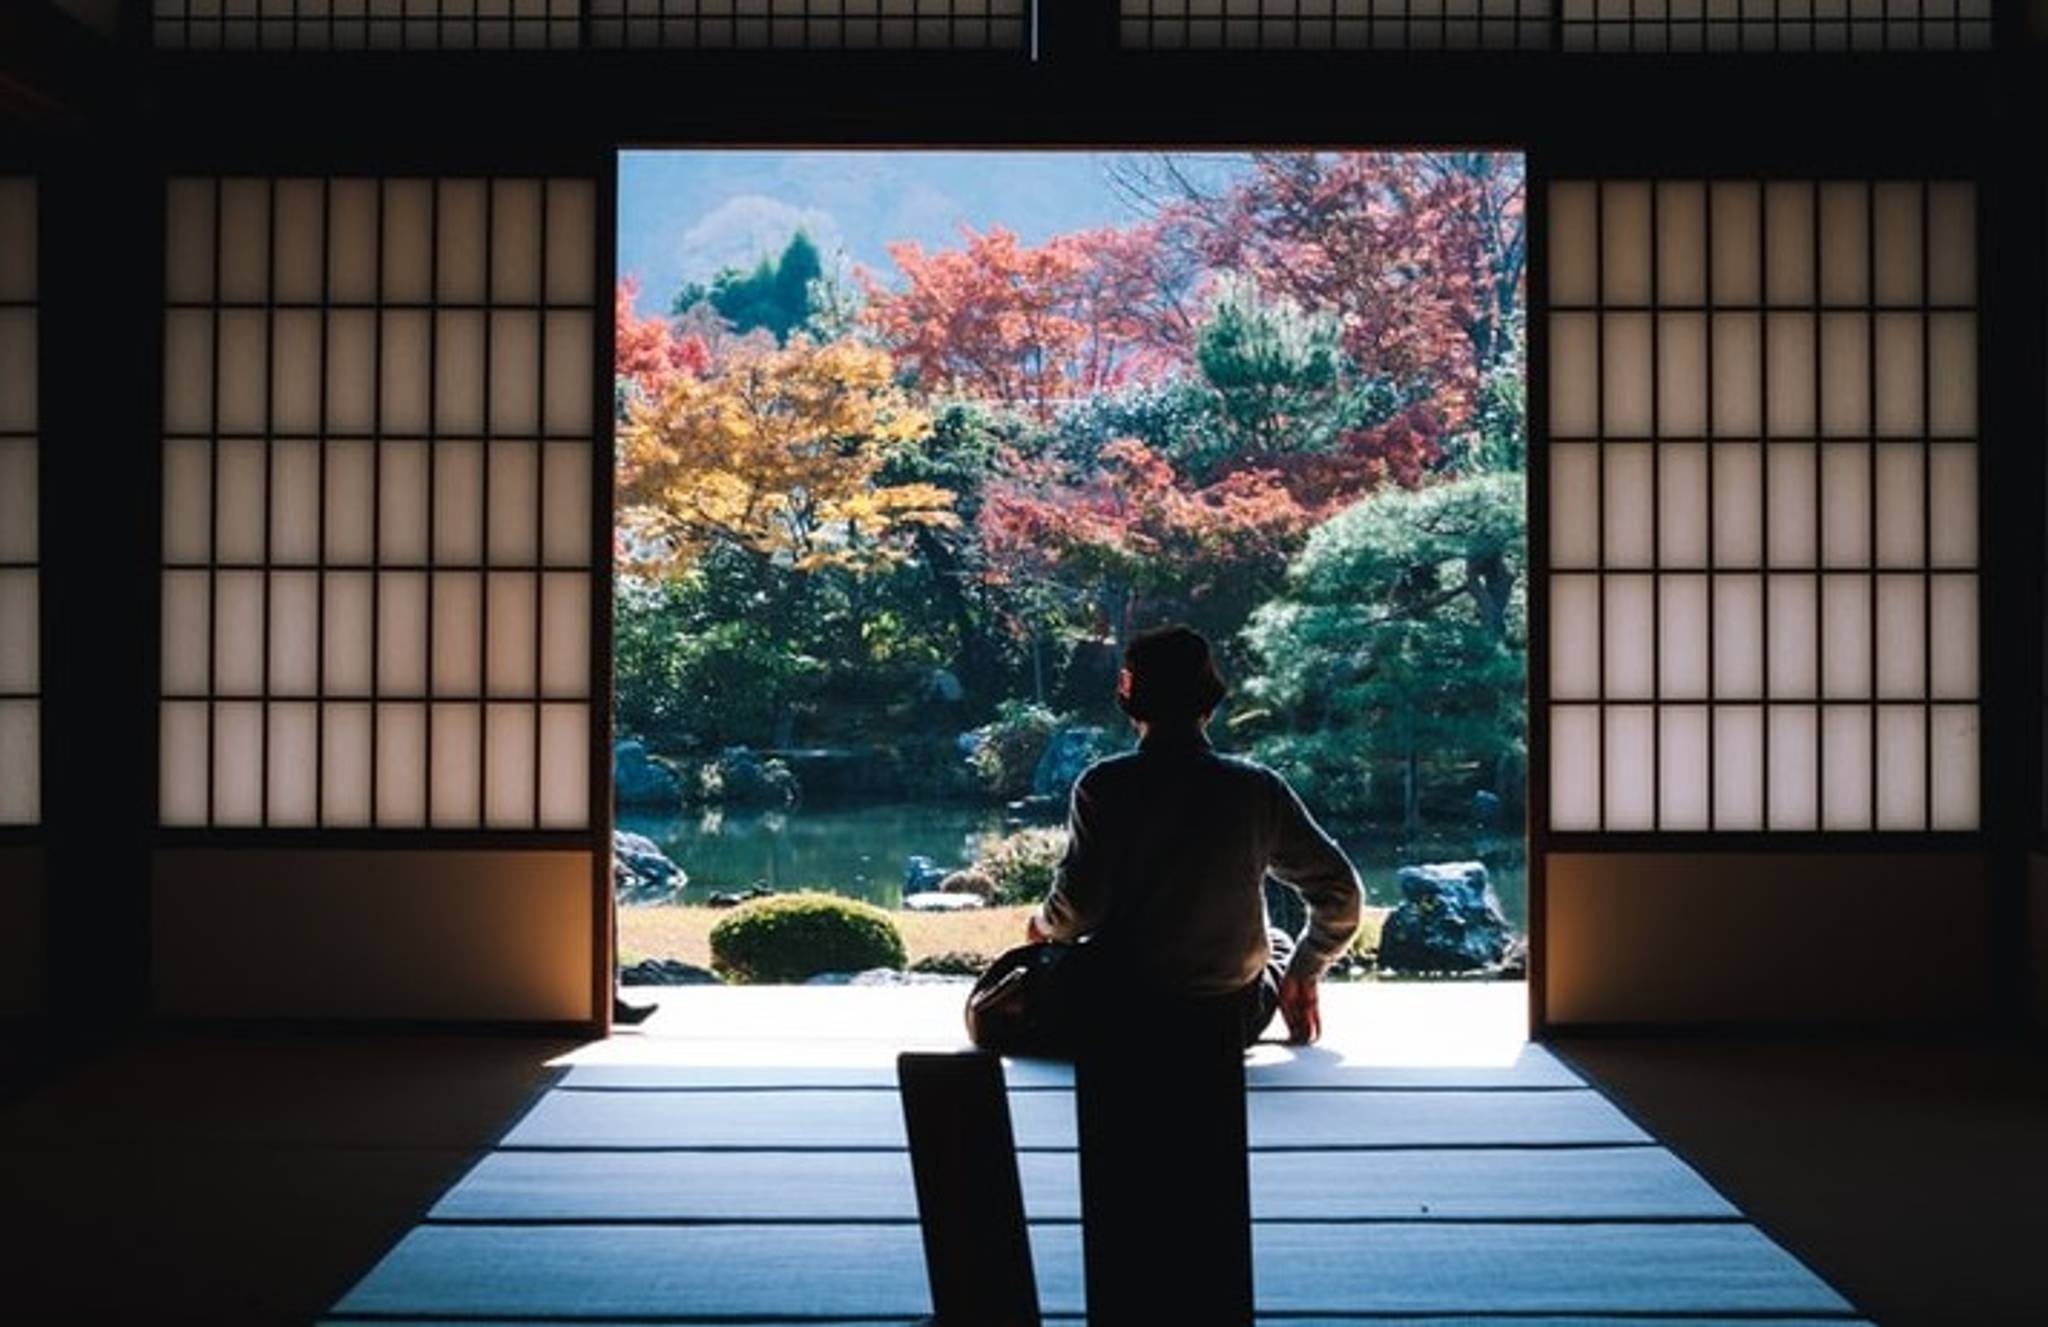 Muji offers low-key housing solution for Japan's elderly